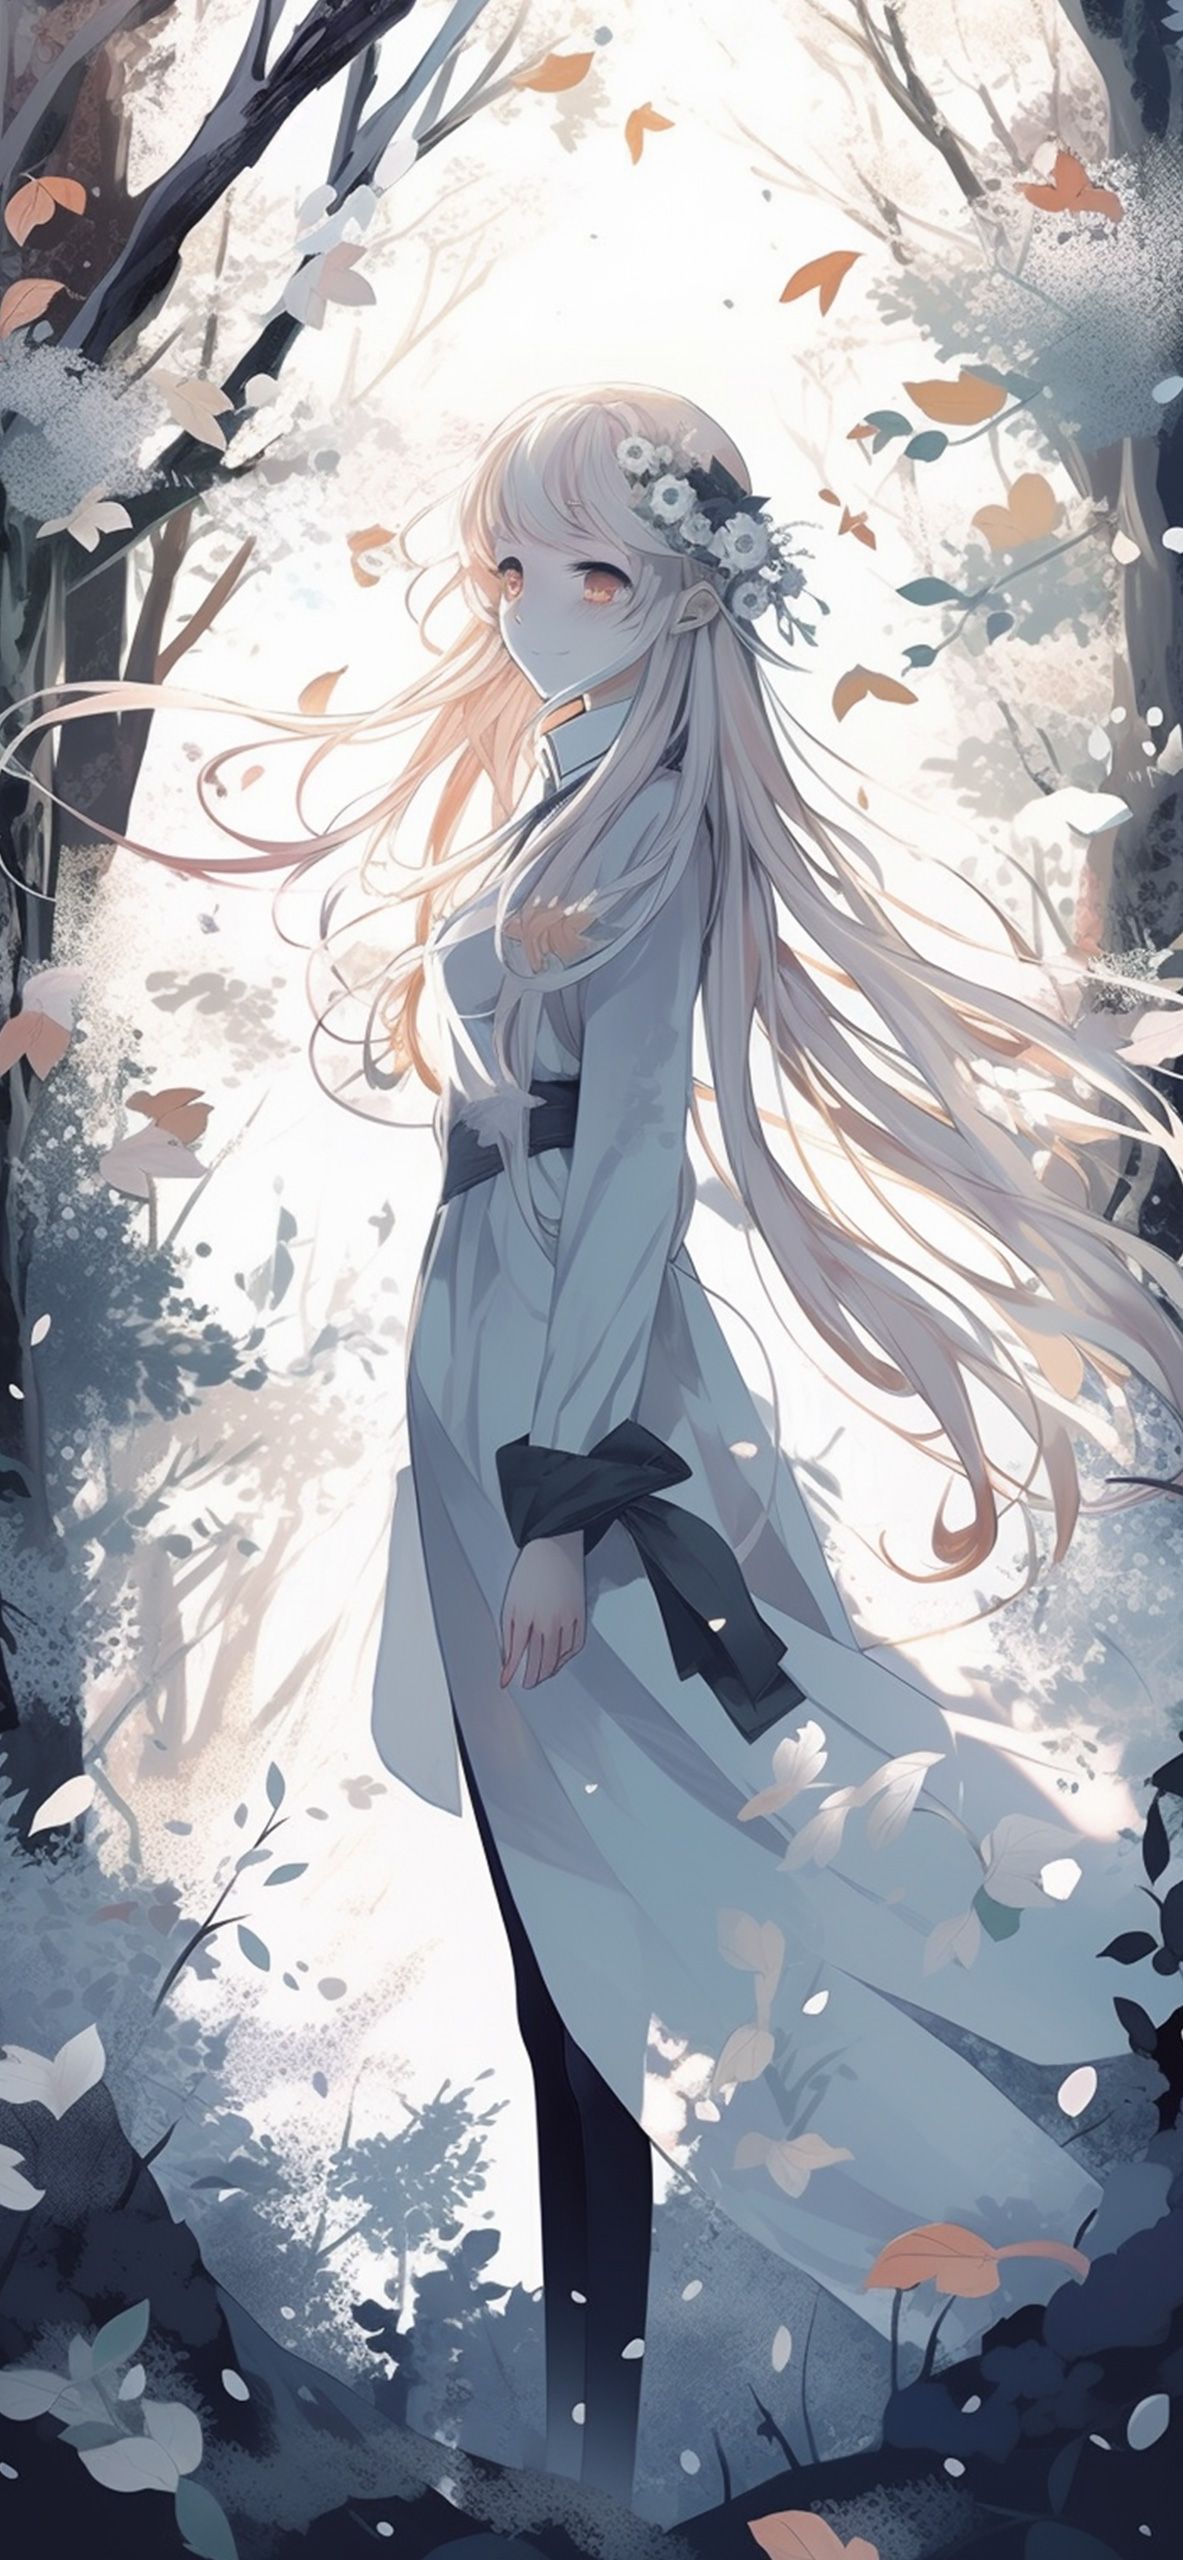 Anime girl with long white hair in a white dress - Anime girl